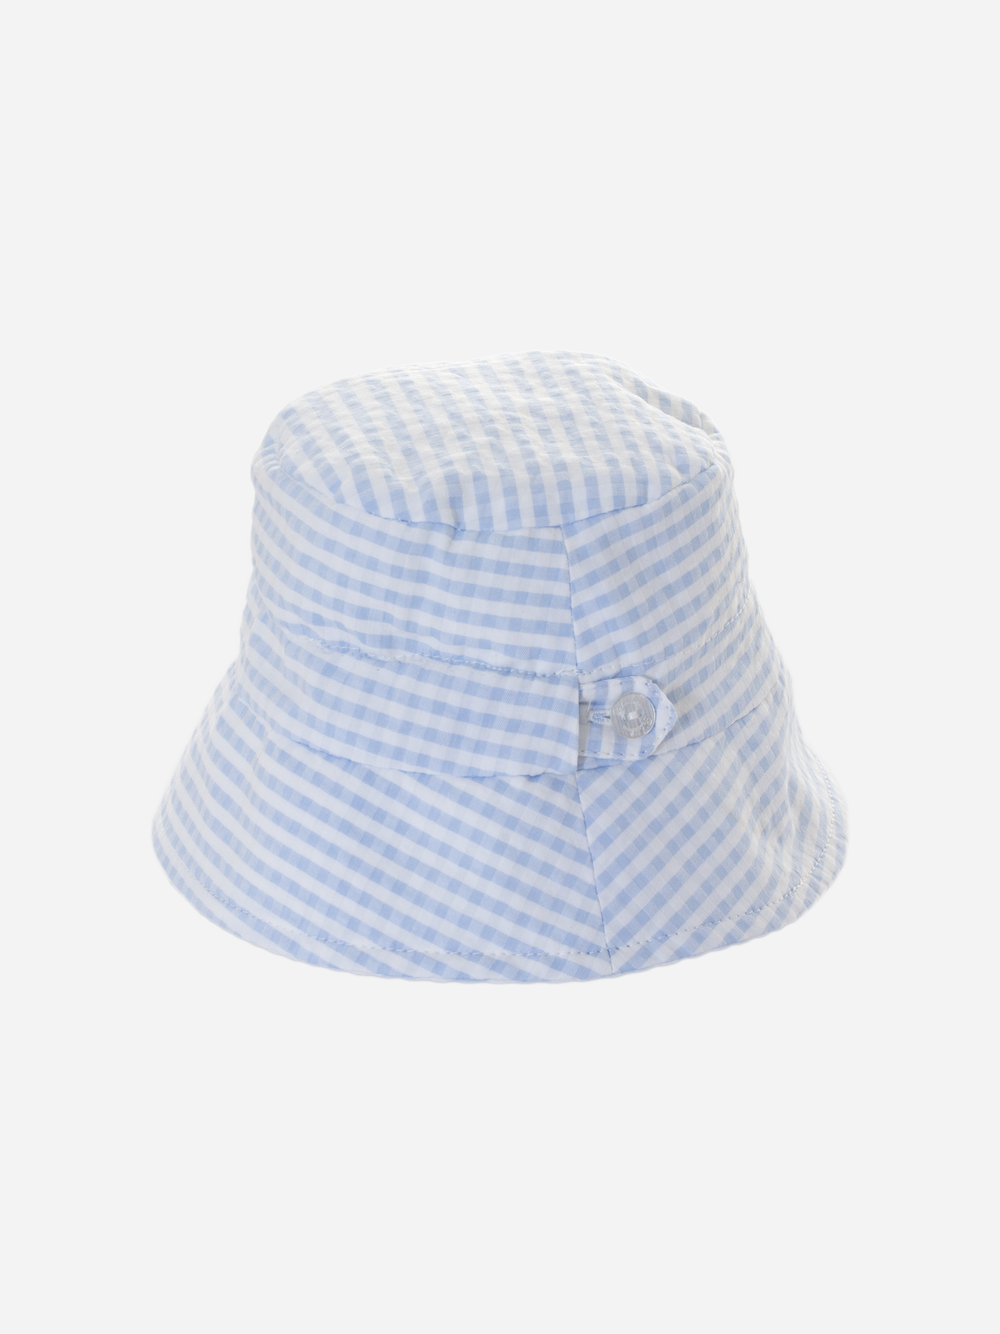 Chapéu de menino com estampado azul xadrez